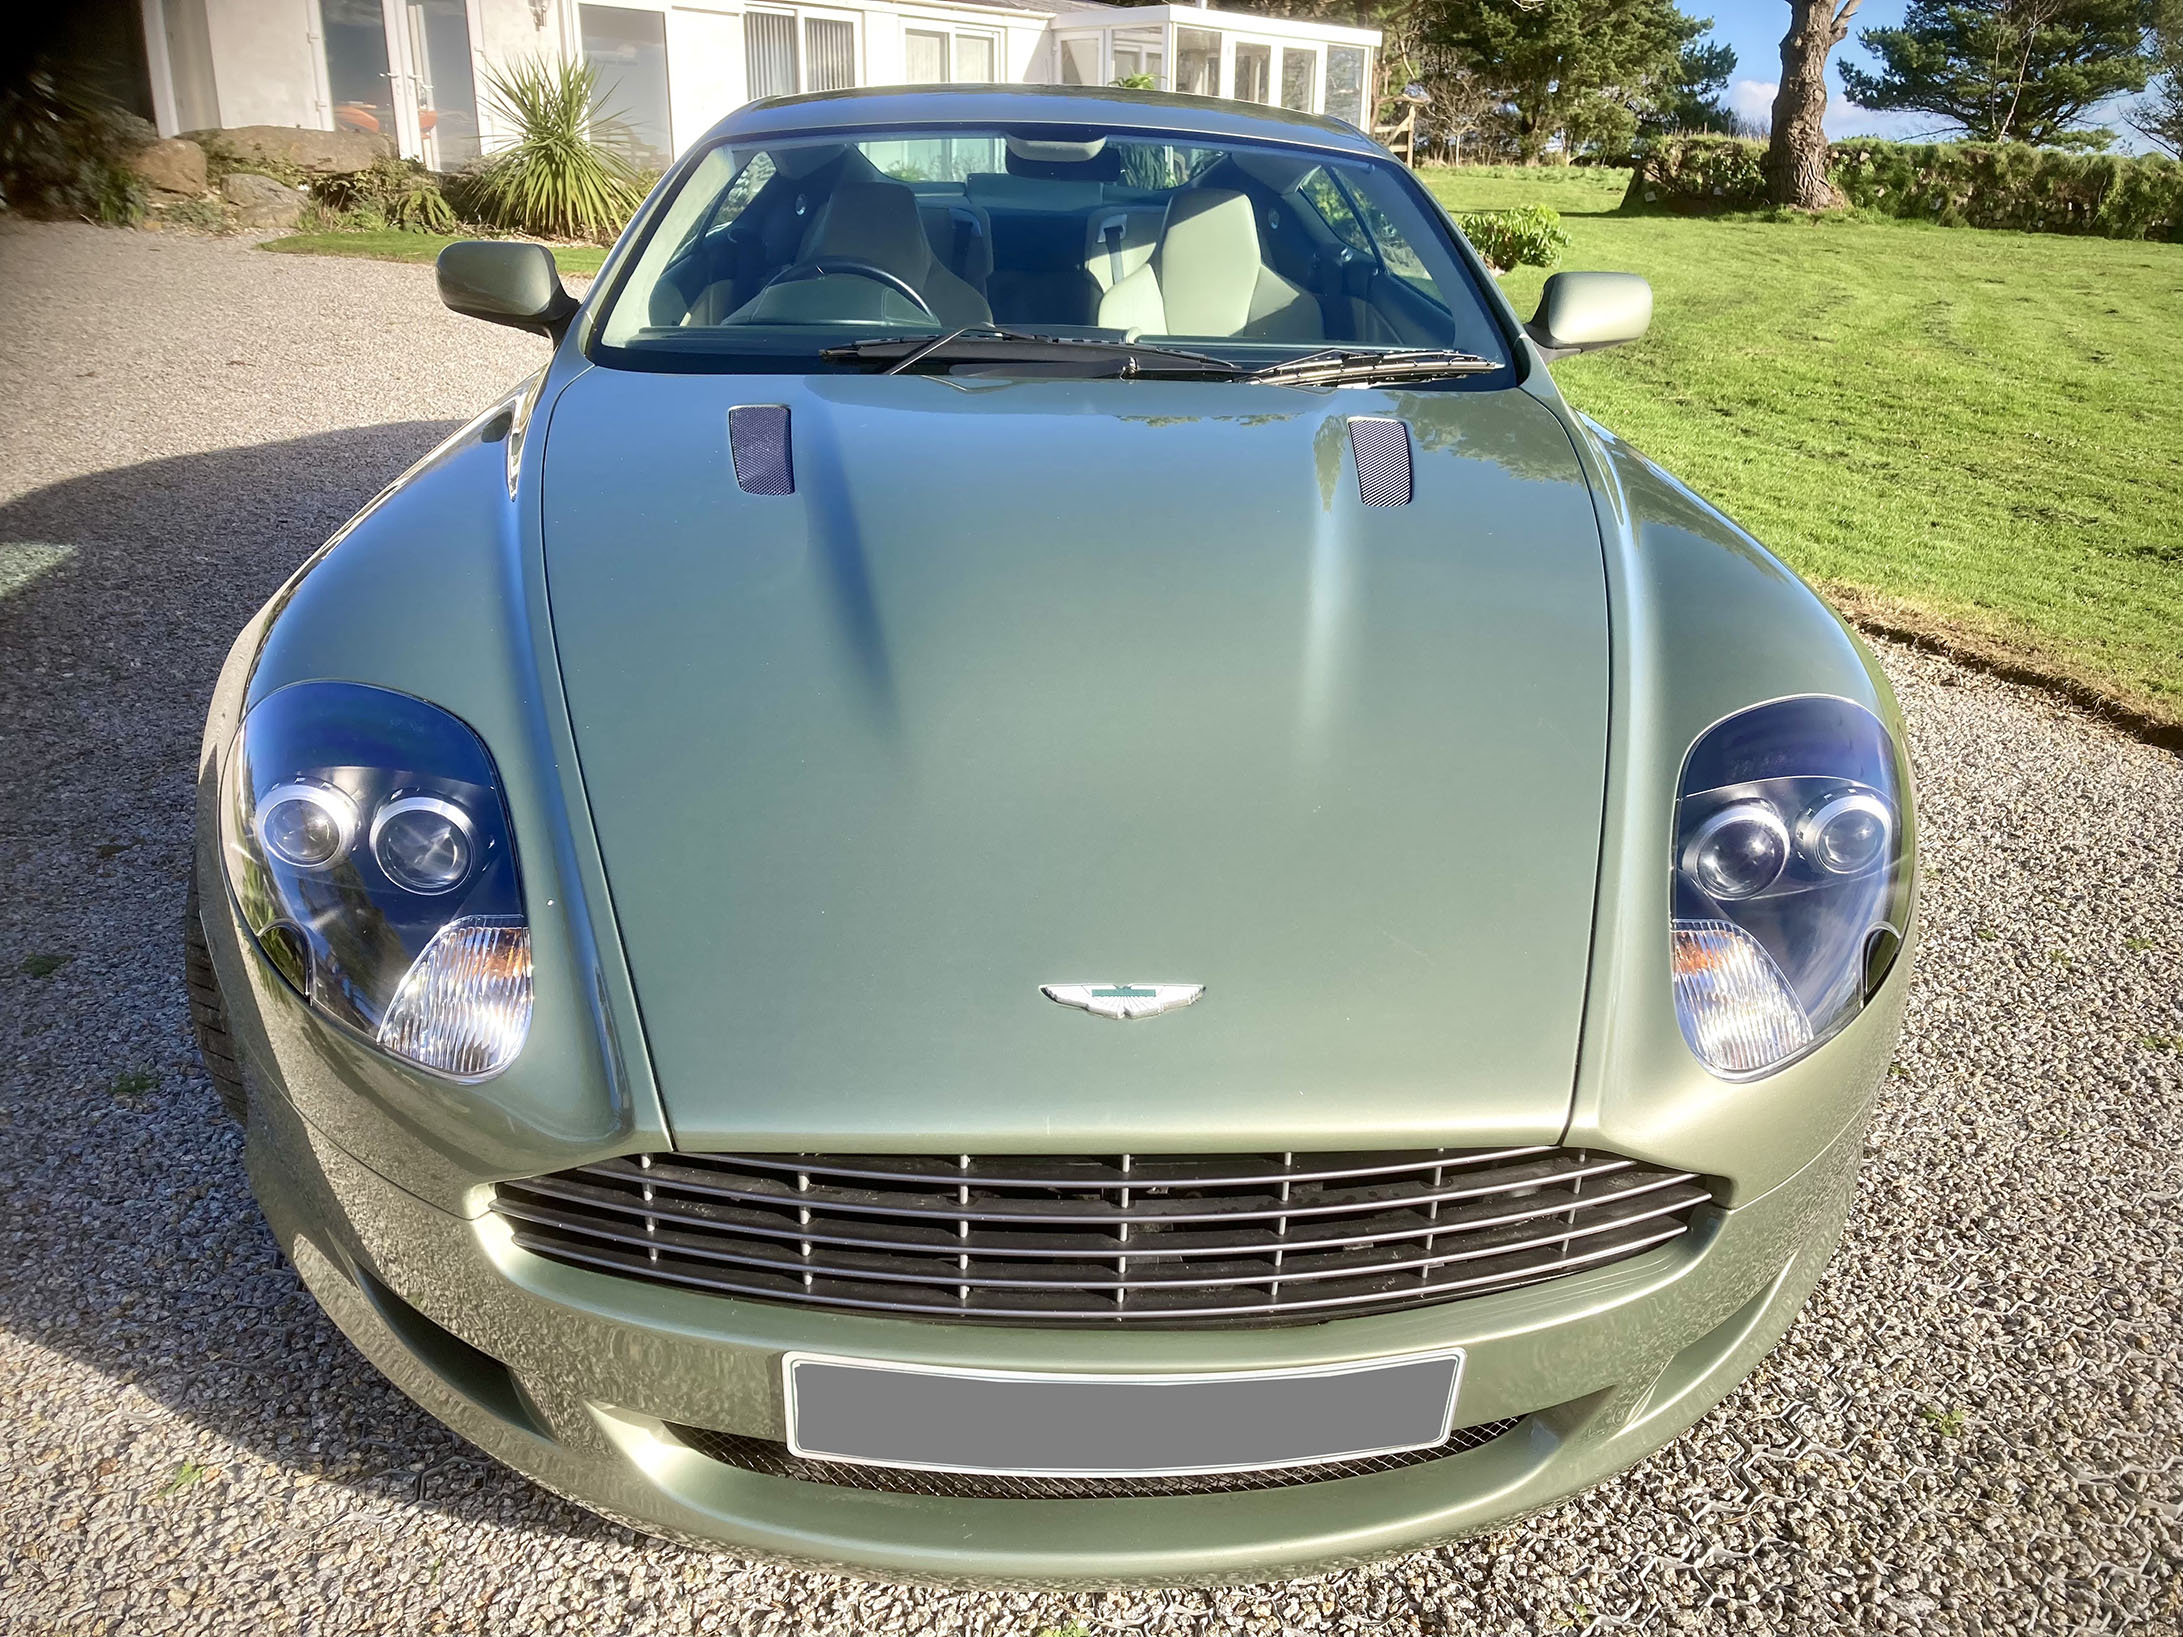 FOR SALE - Aston Martin 19” Wheels